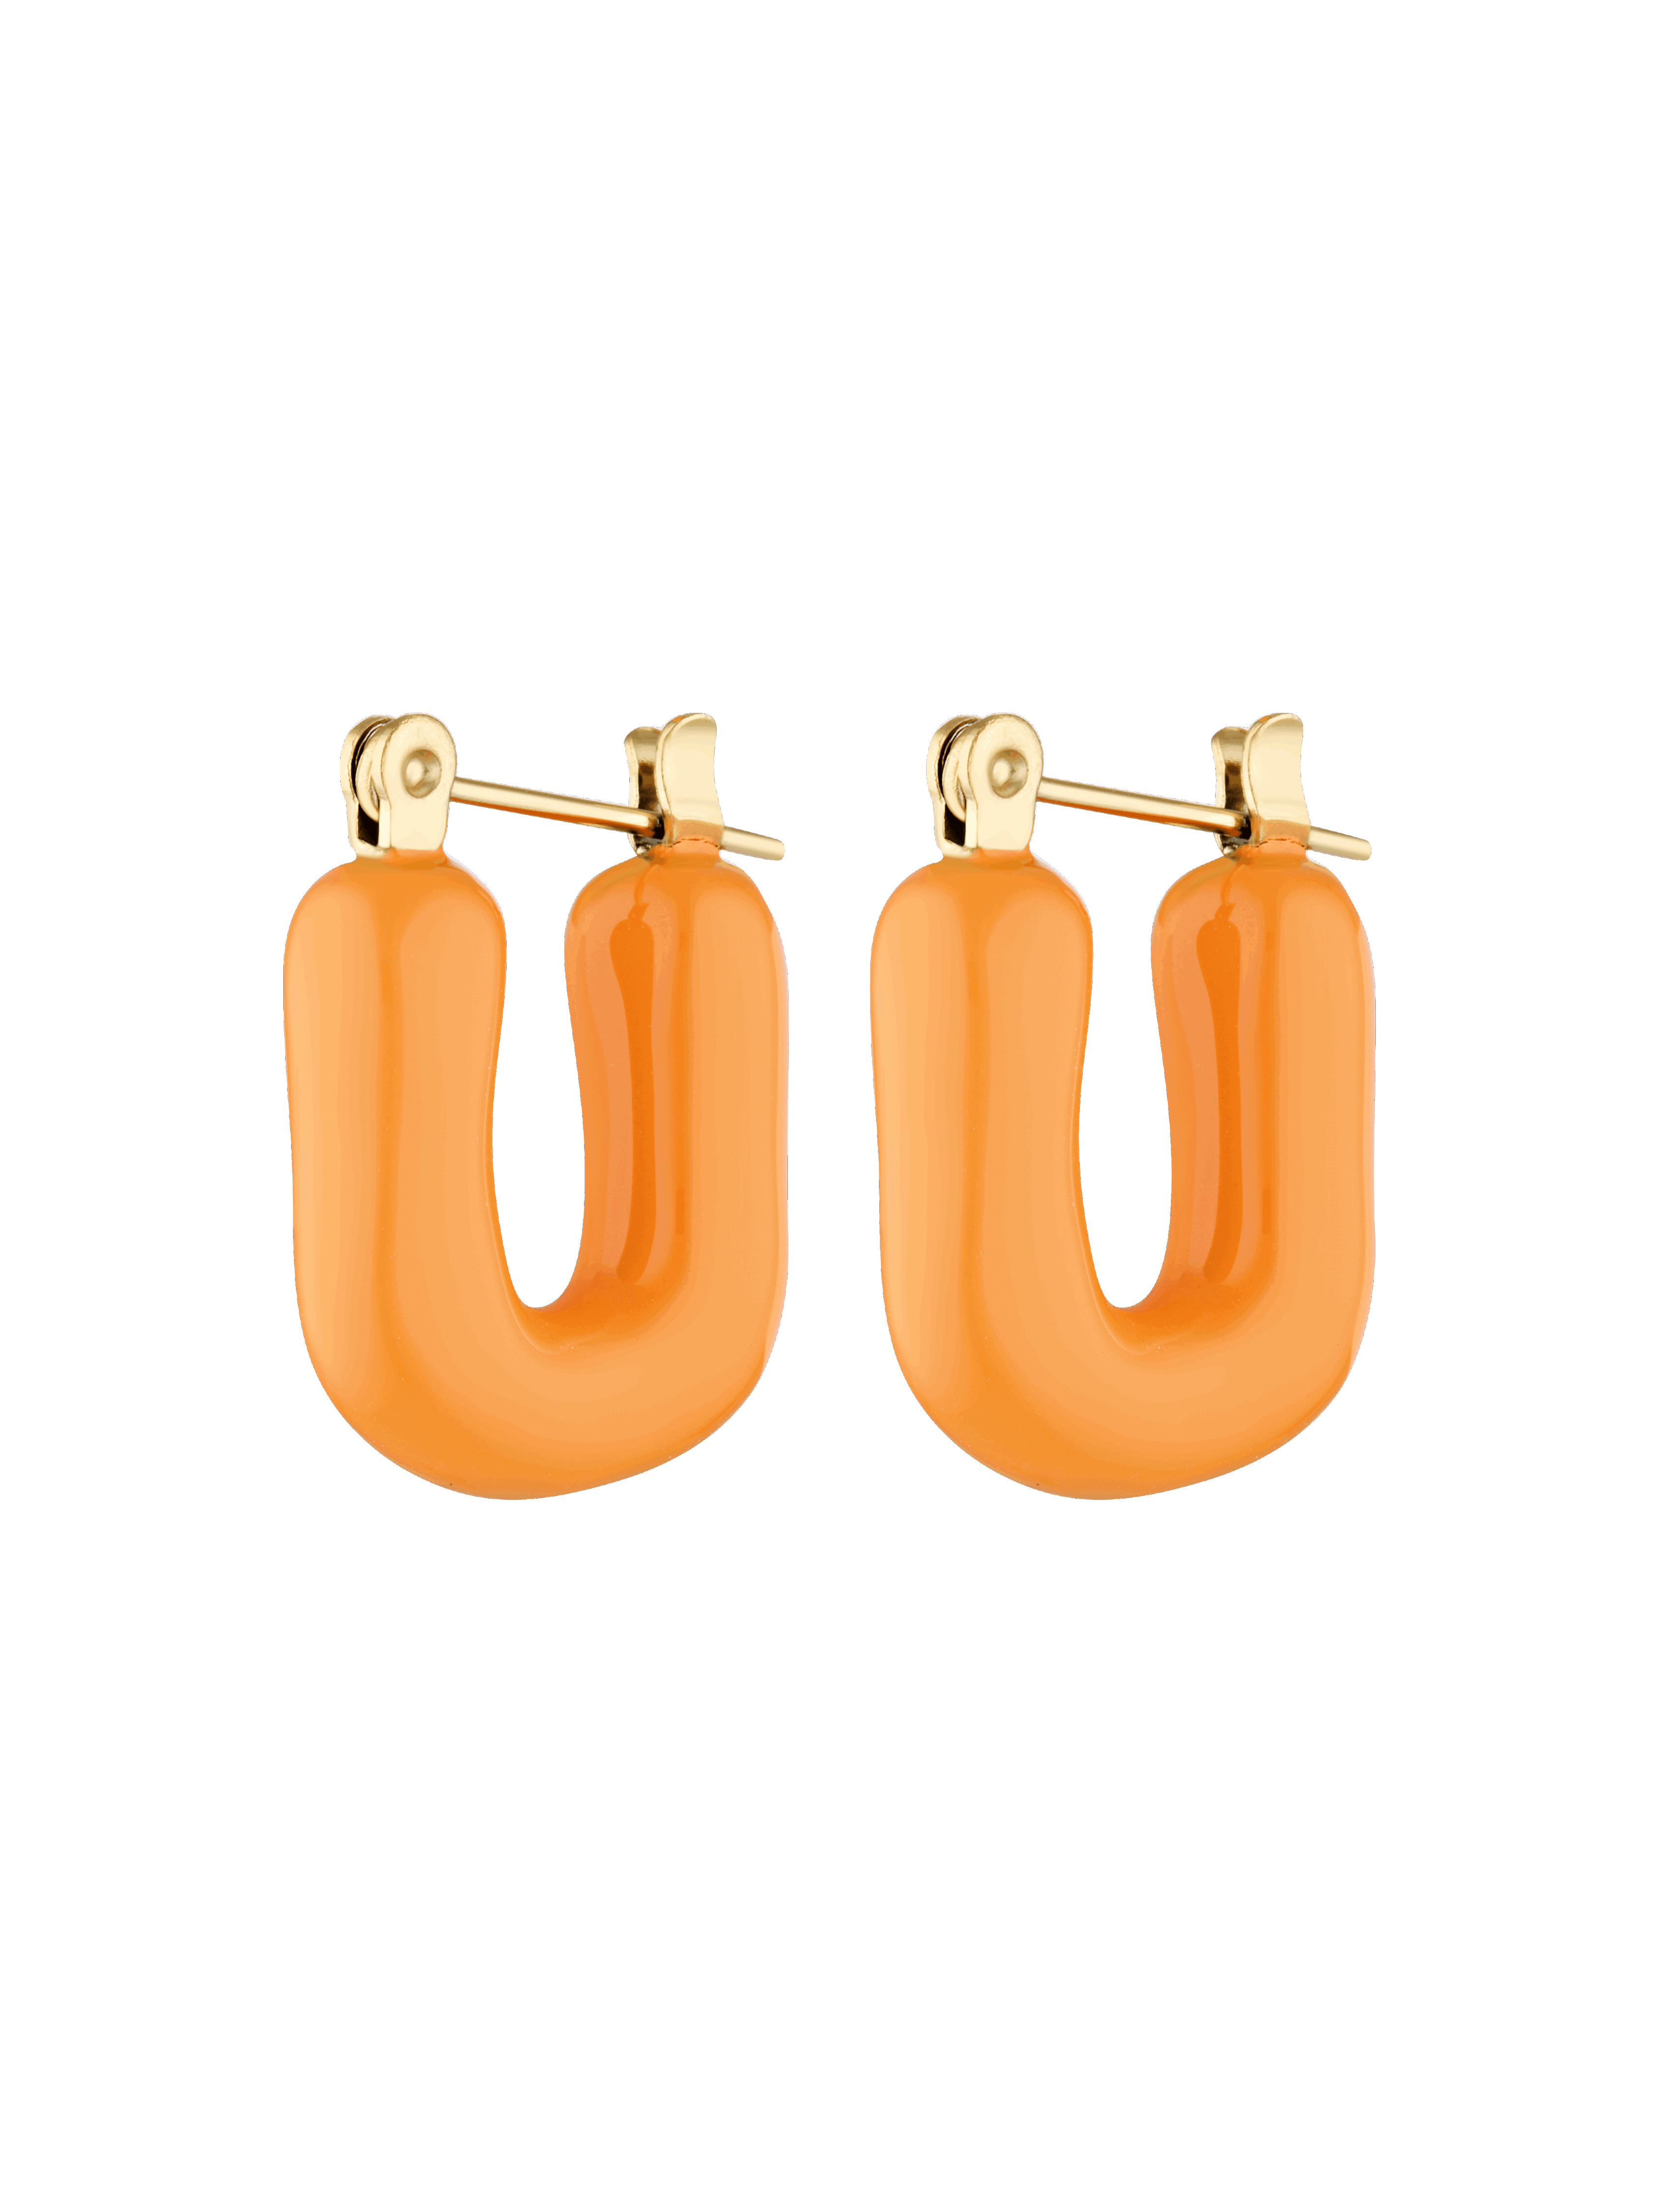 Fun gold and orange enamel earrings 